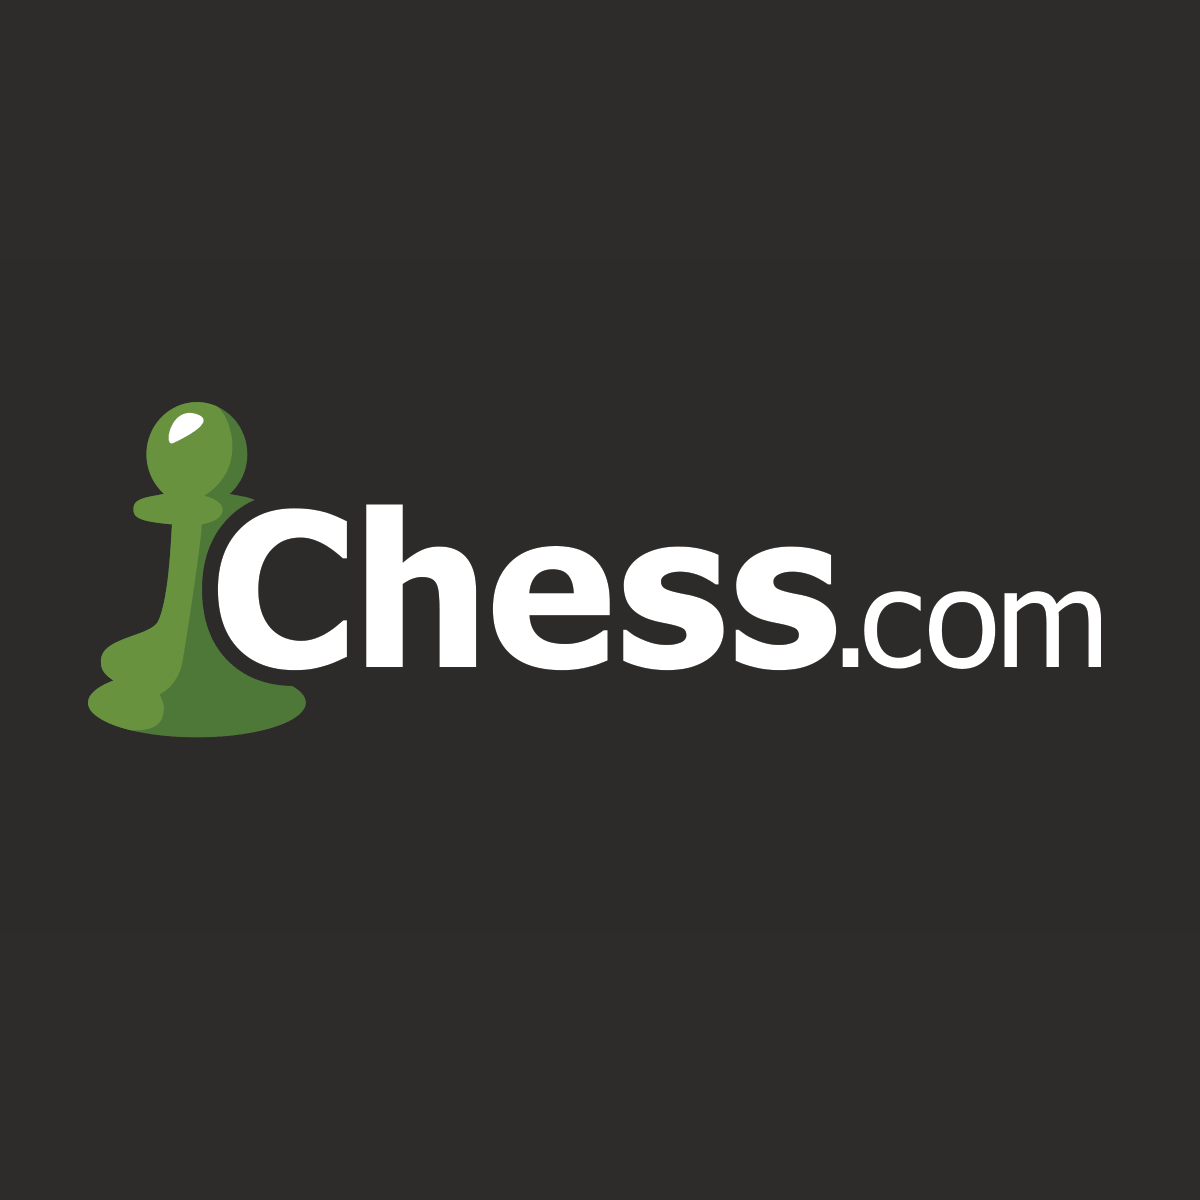 Vavadarnb com. Chess.com. Значок Chess.com. Логотип ческом.